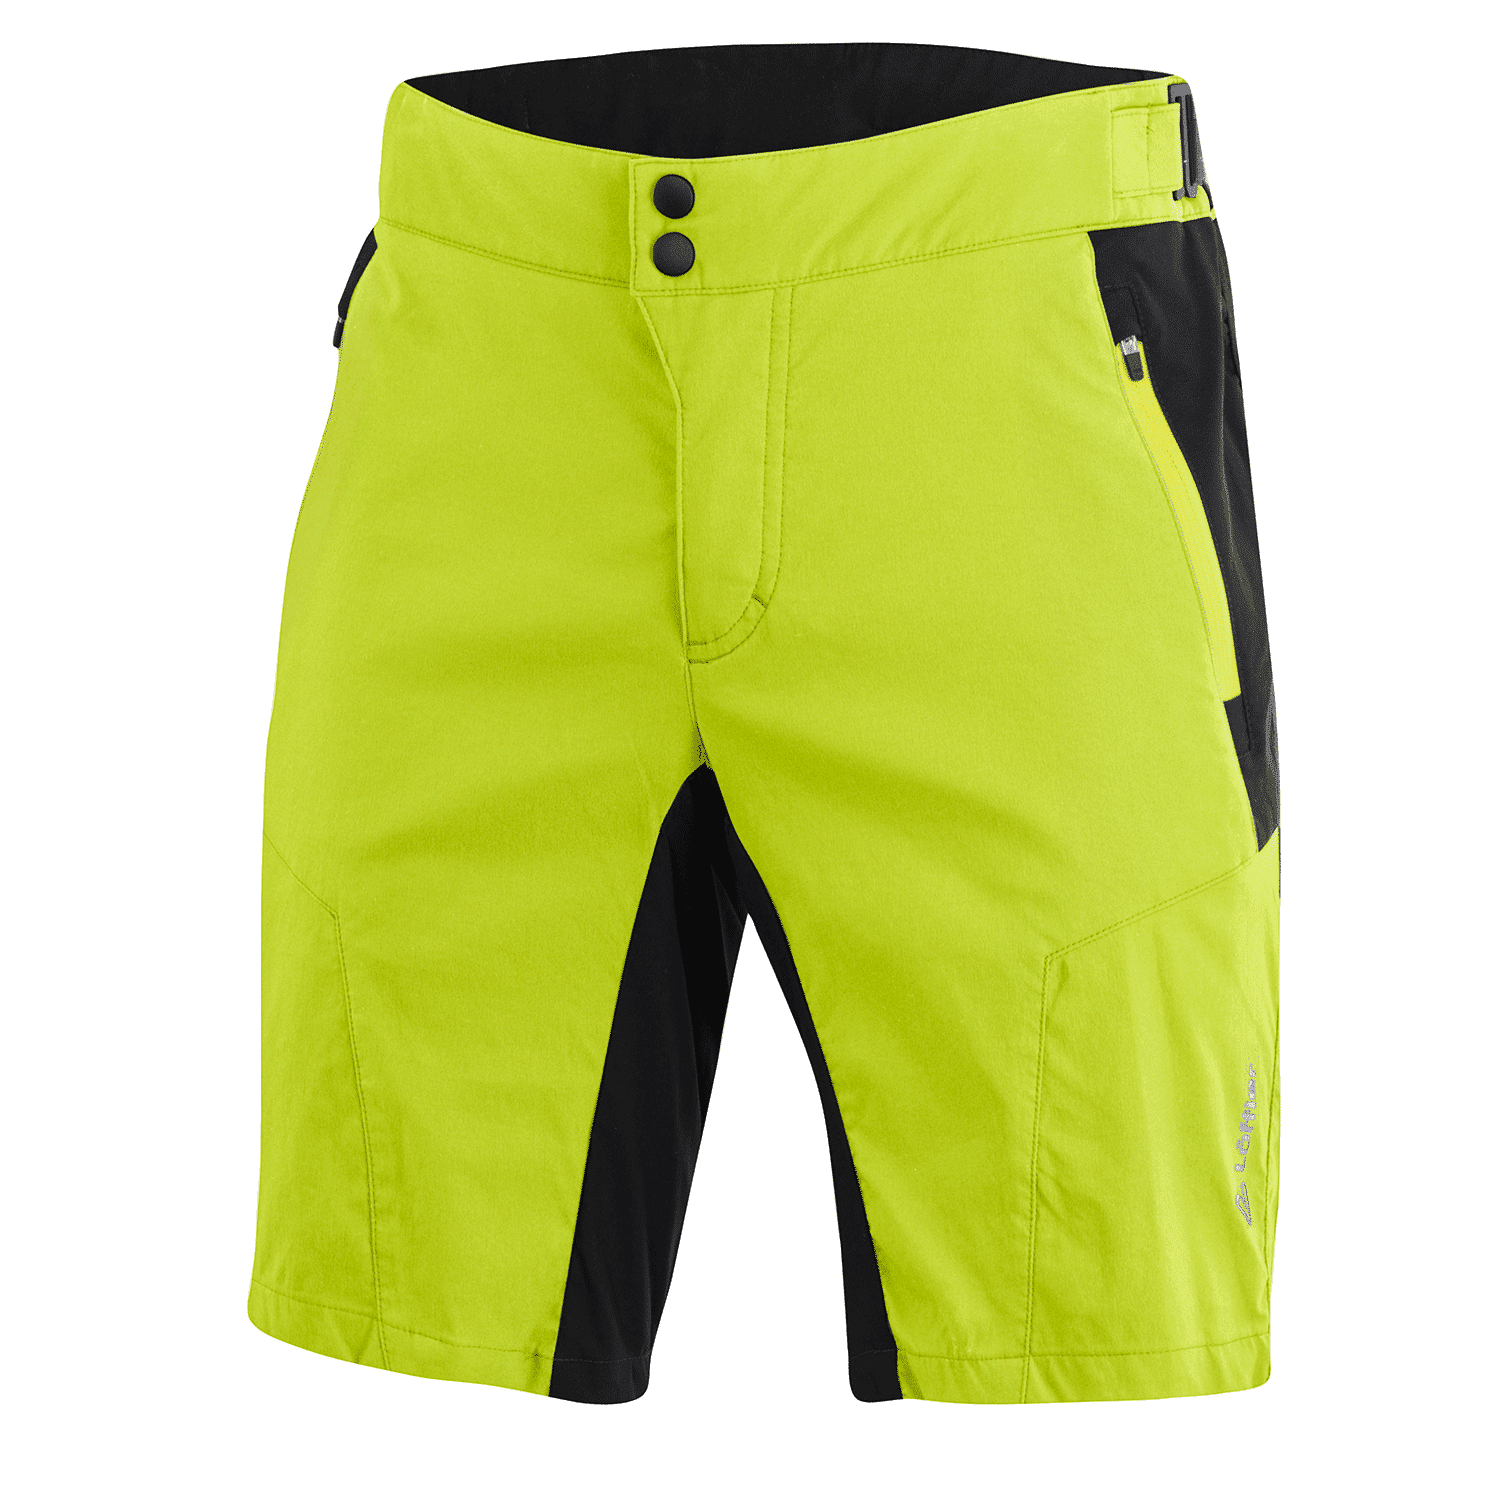 Löffler Bike Shorts Evo CSL - MTB shorts - Men's